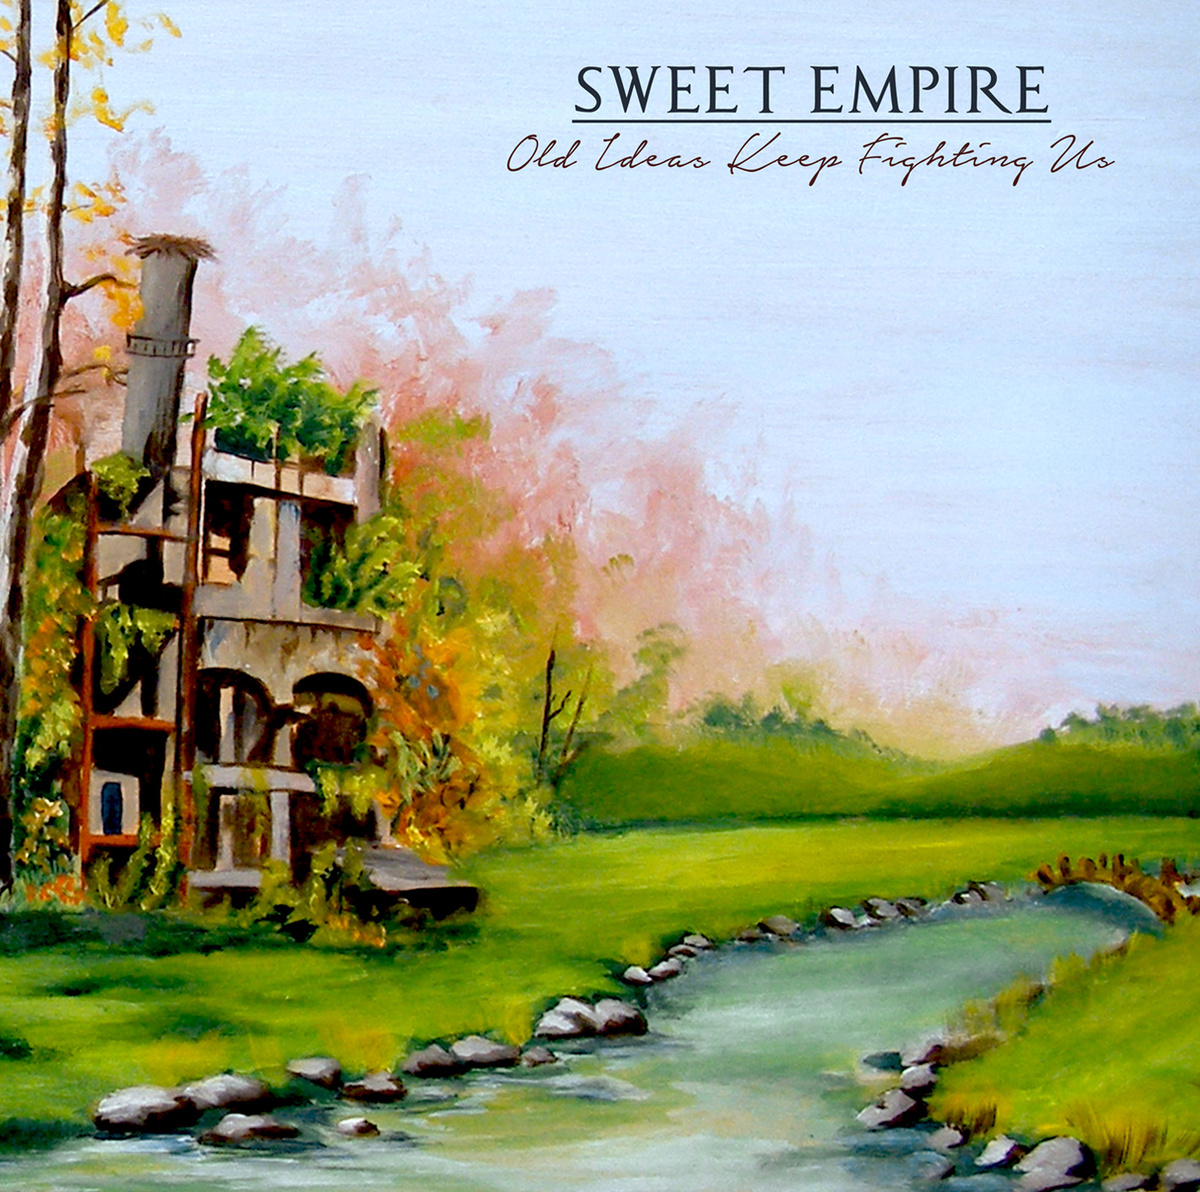 Sweet Empire announces second album, release video.